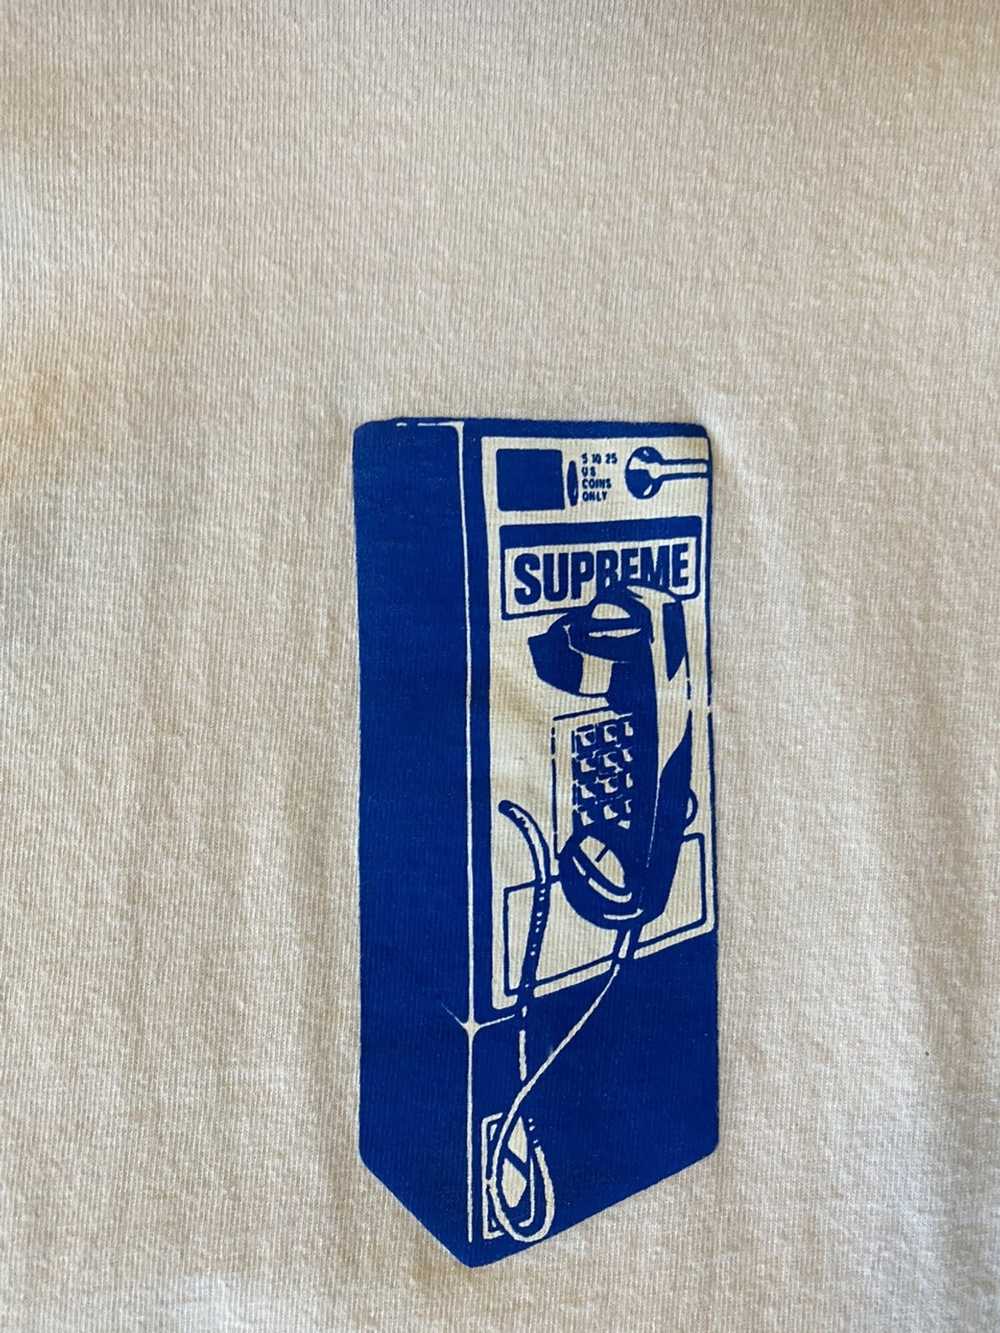 Supreme Phone Booth Tee - image 2